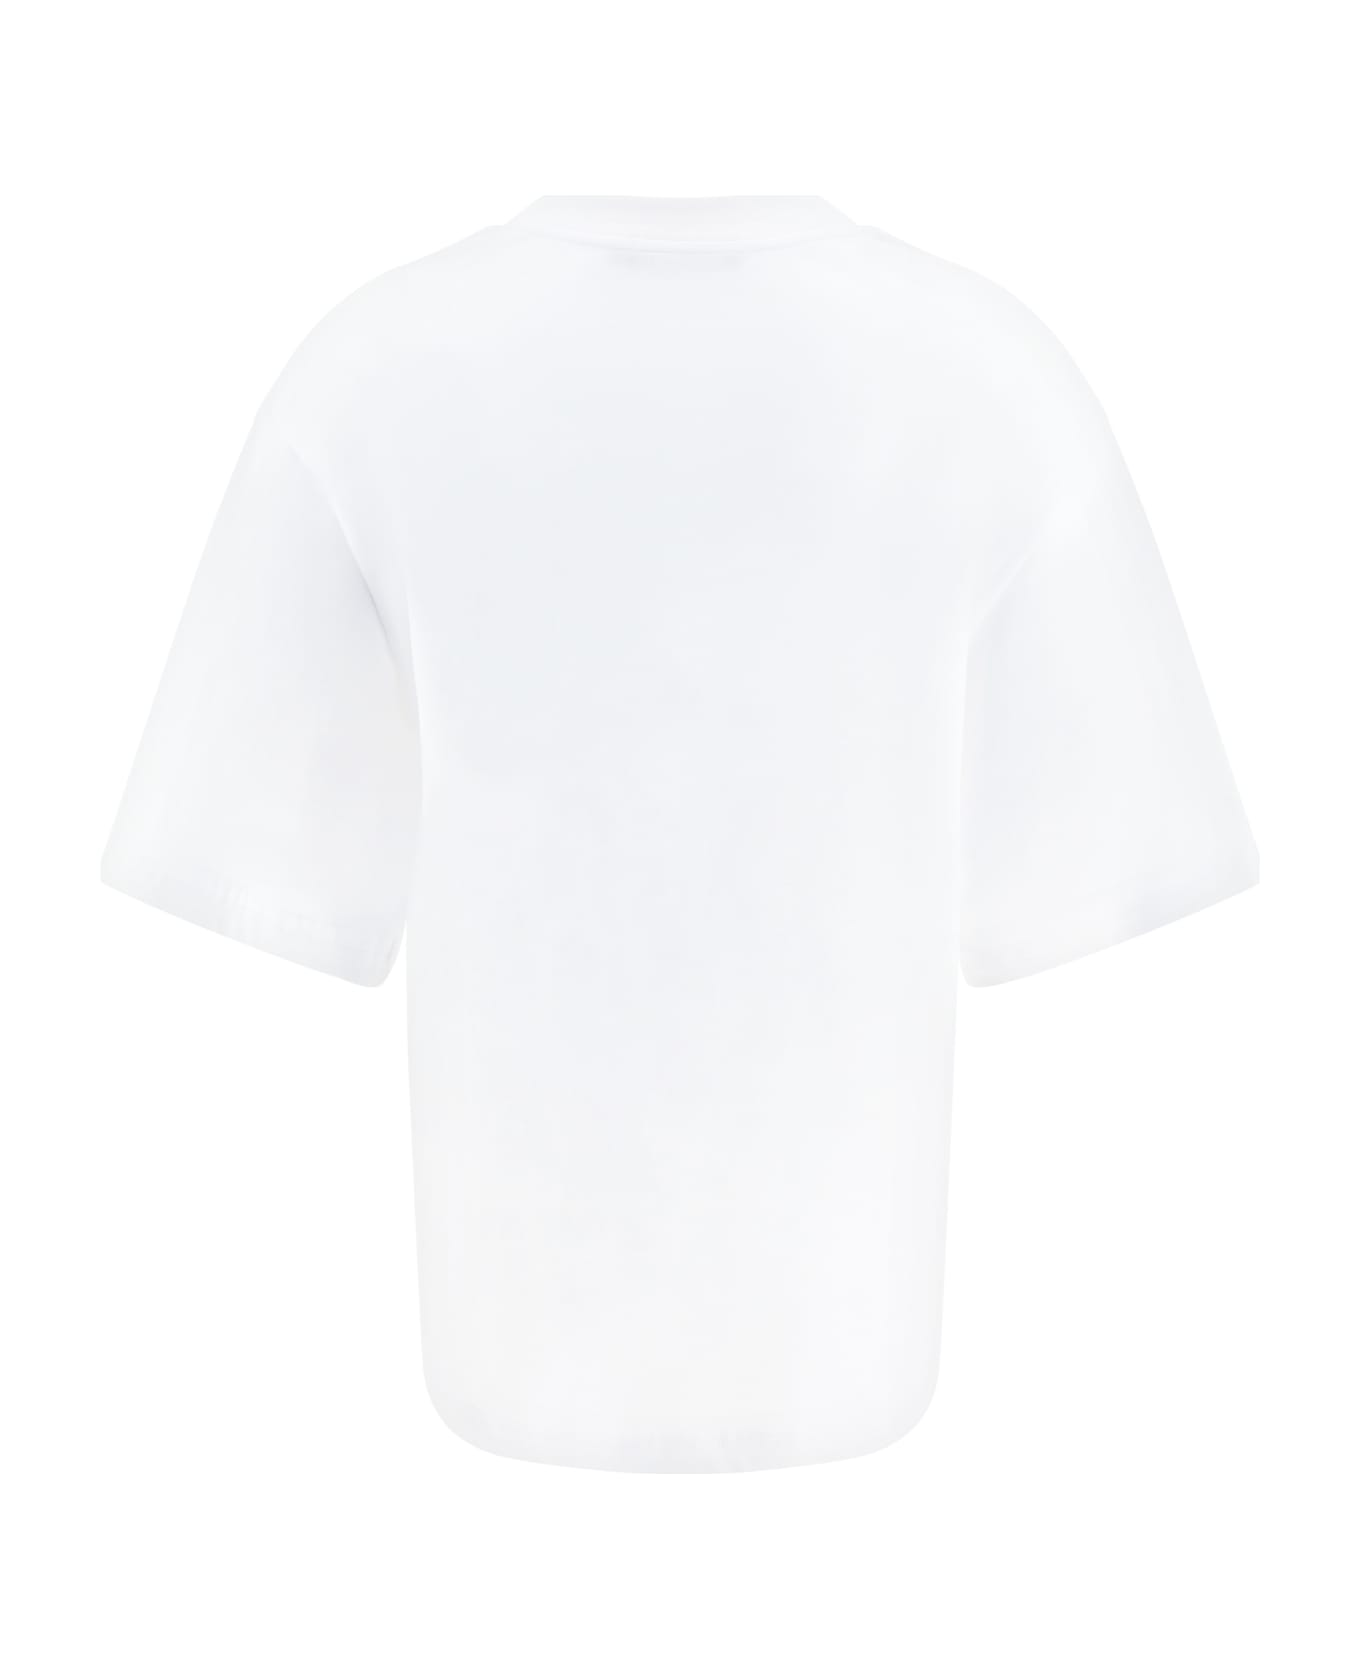 Dolce & Gabbana T-shirt With Logo - Bianco Ottico Tシャツ